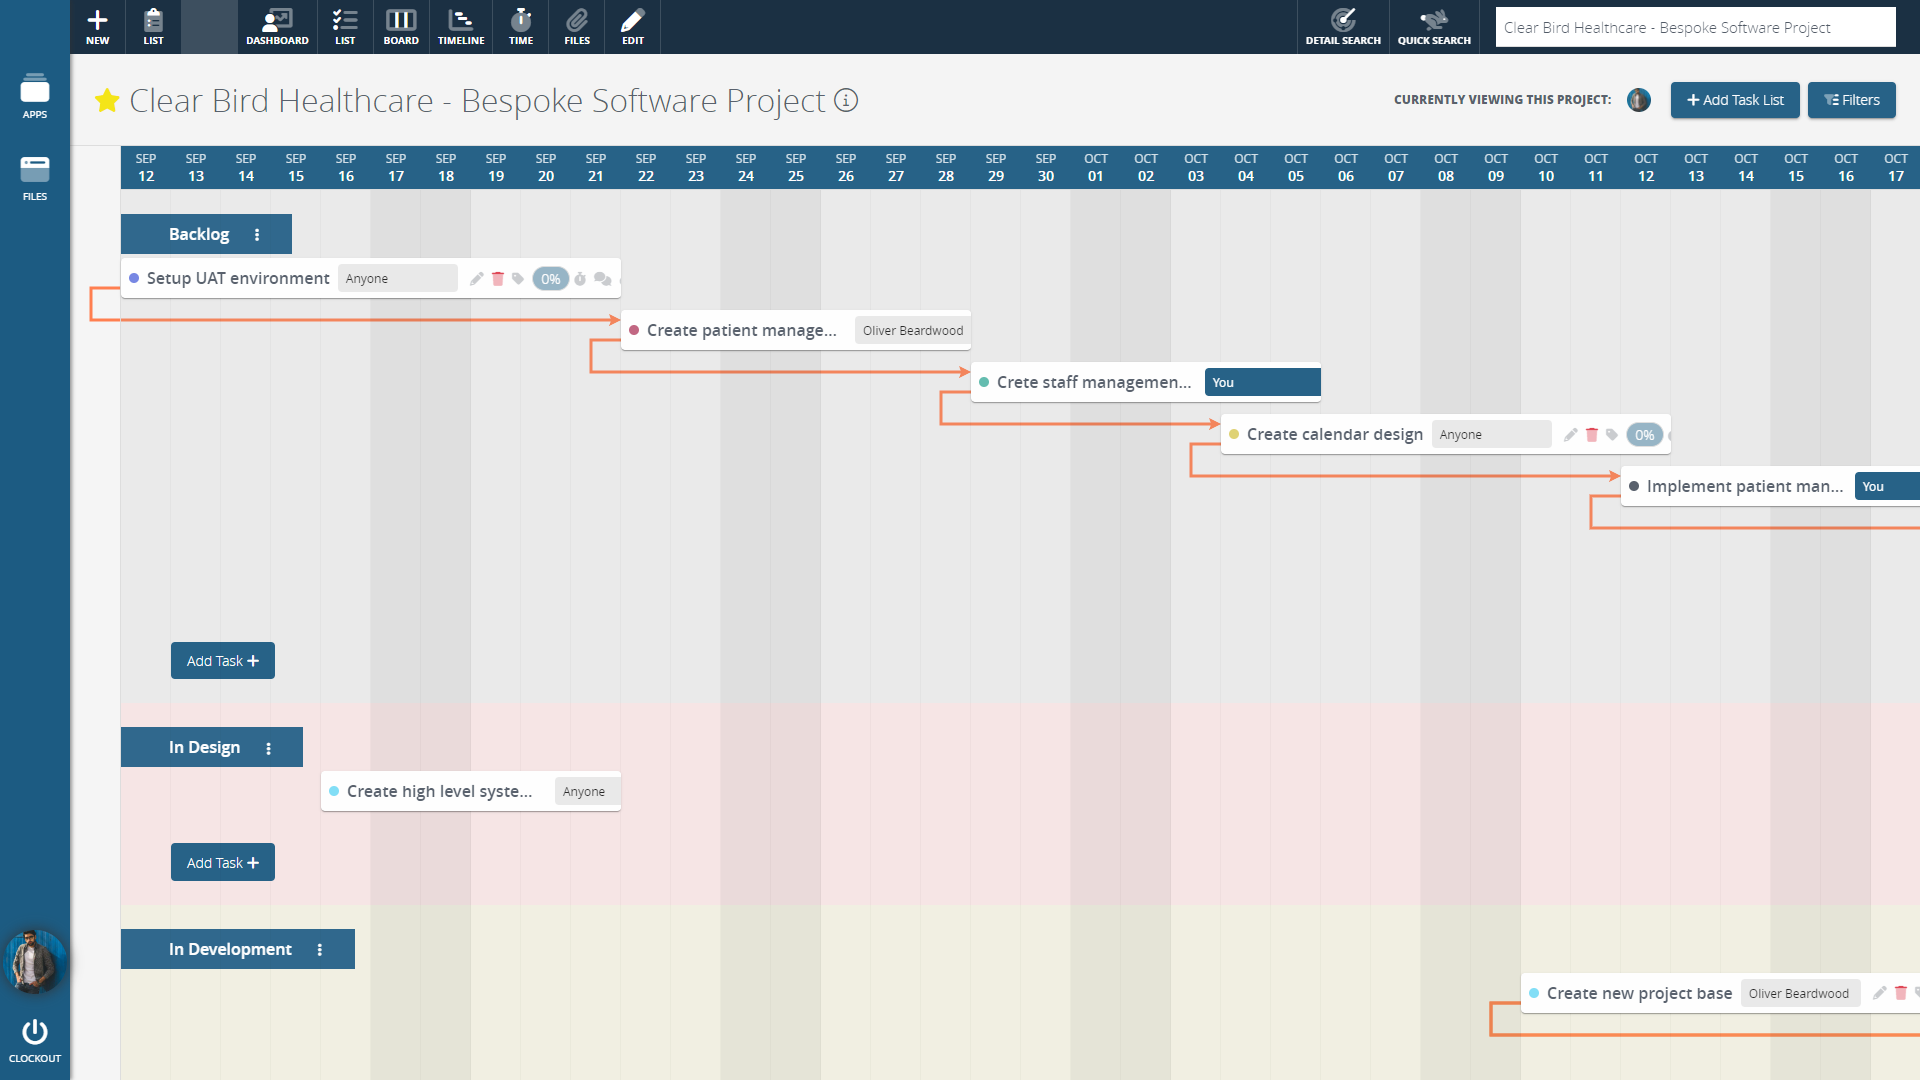 Project management timeline view image